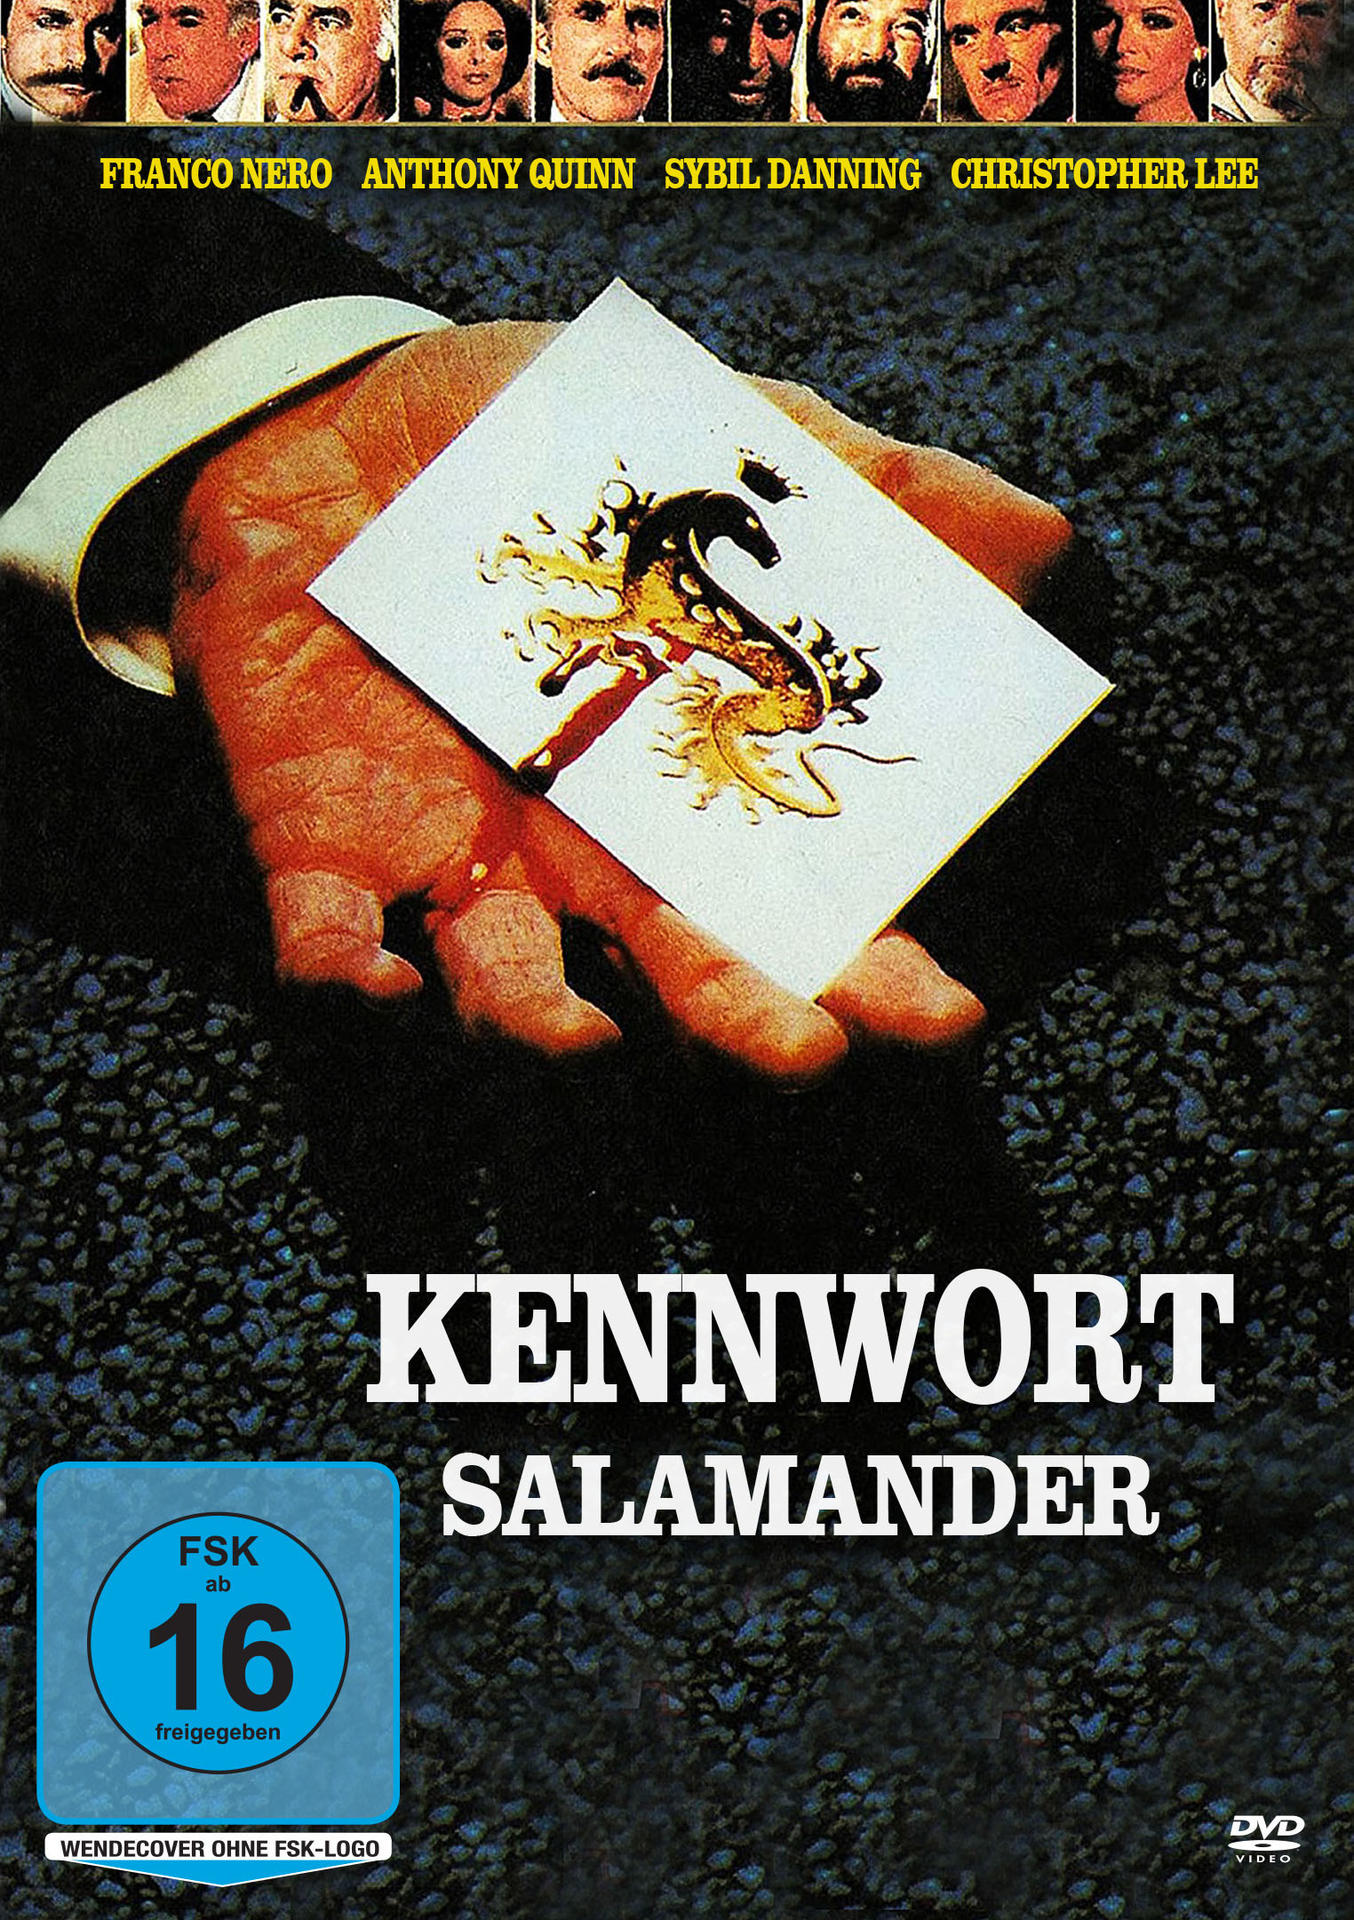 DVD Salamander Kennwort